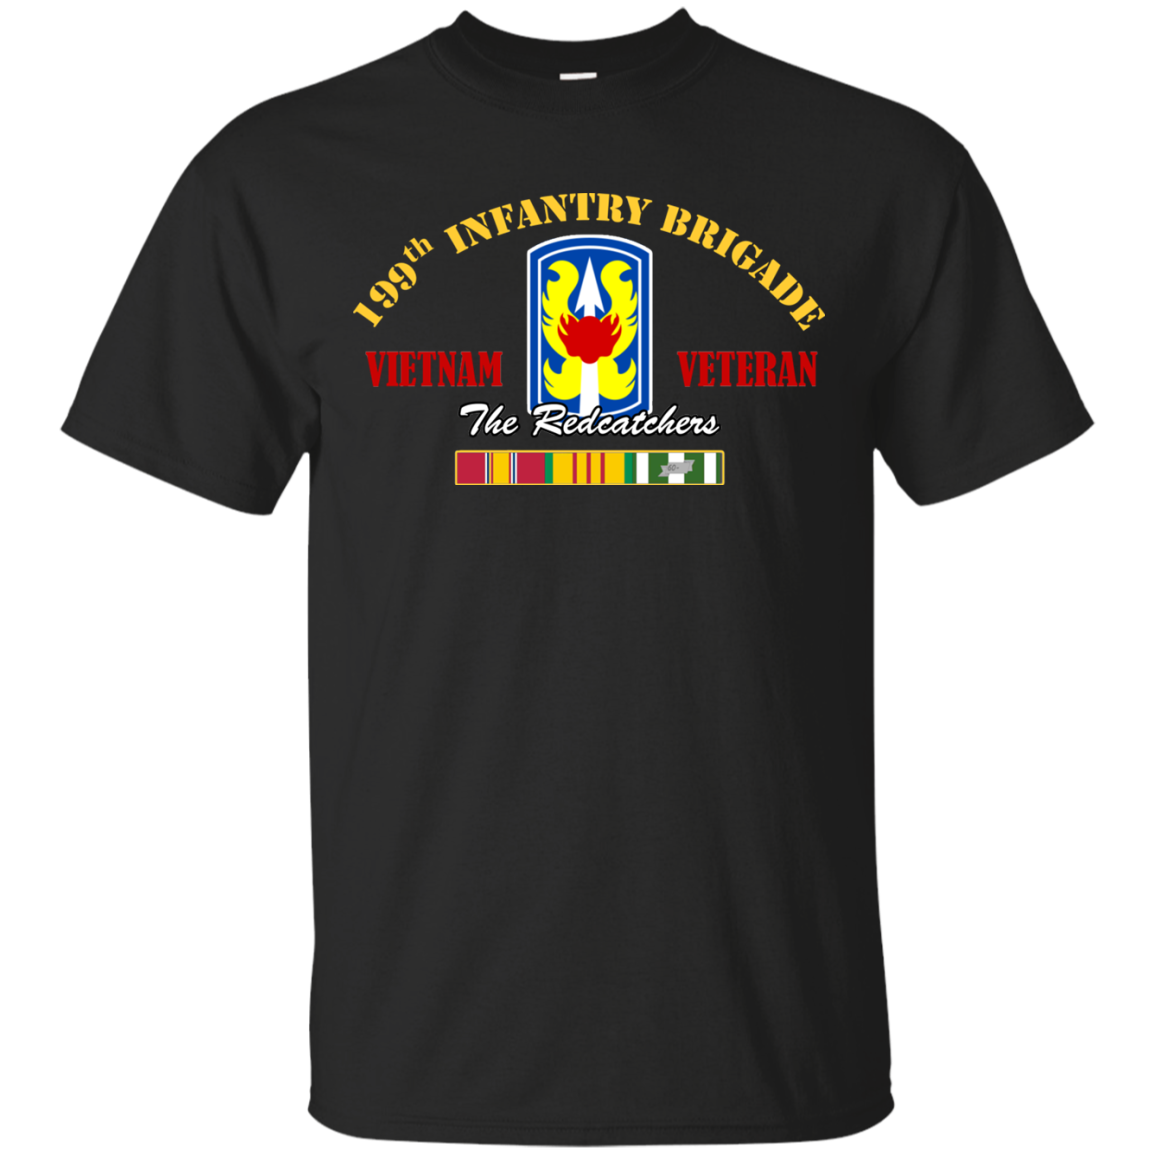 199th Infantry Brigade Vietnam Veteran Shirts The Redcatchers - Teesmiley